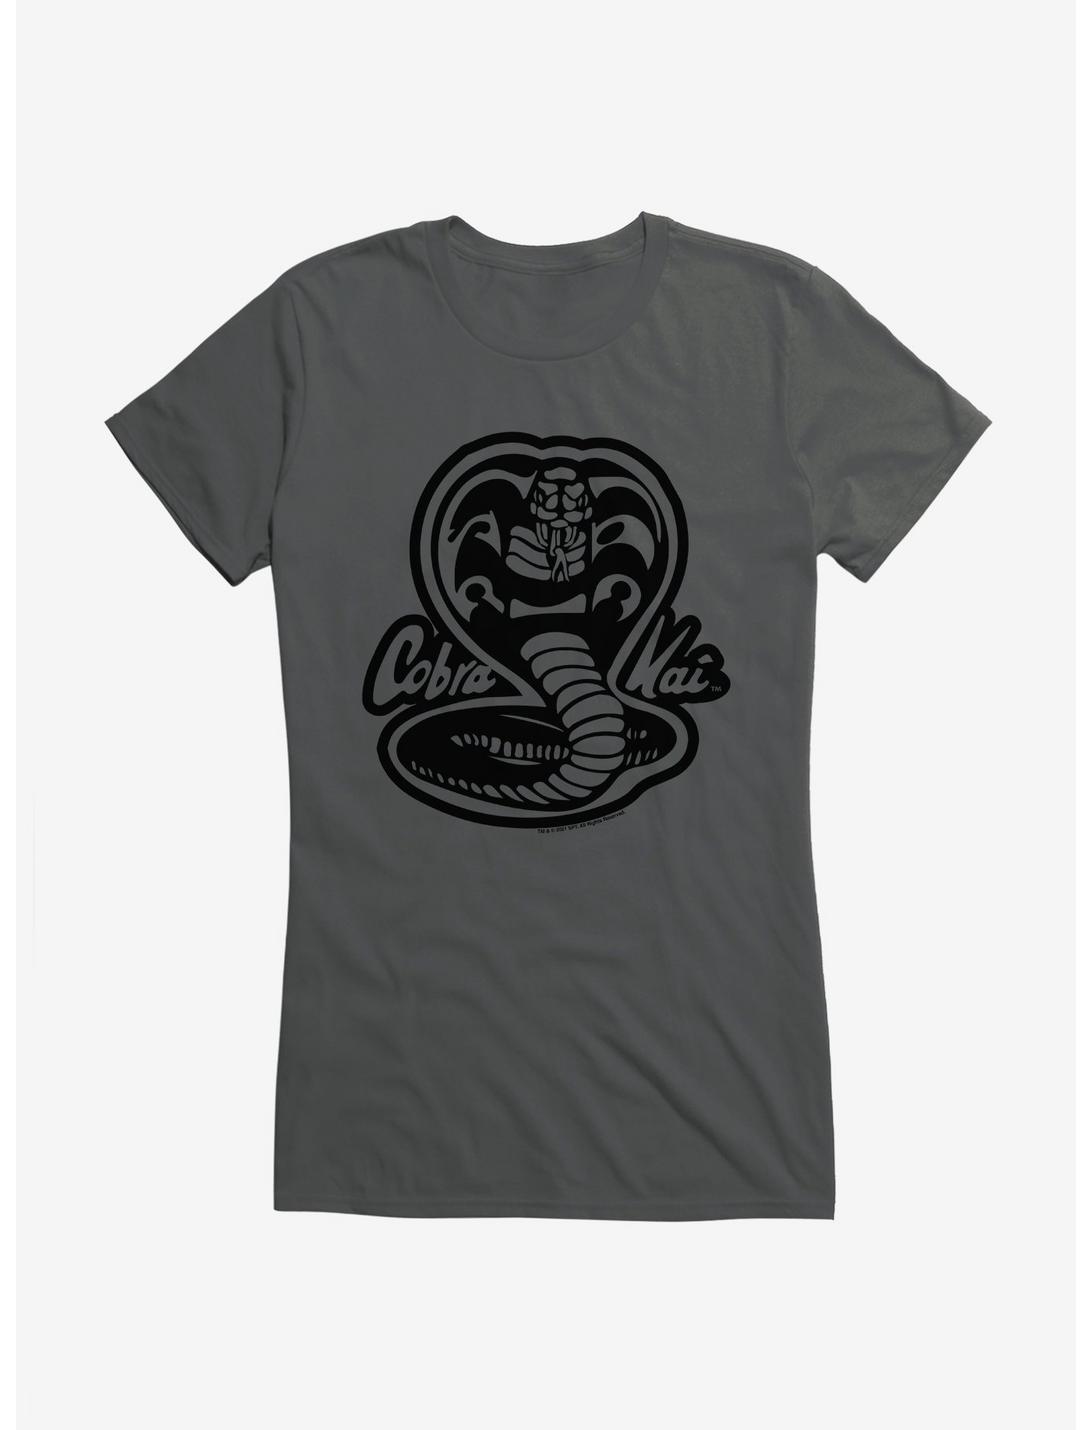 Cobra Kai Black And White Logo Girls T-Shirt, CHARCOAL, hi-res